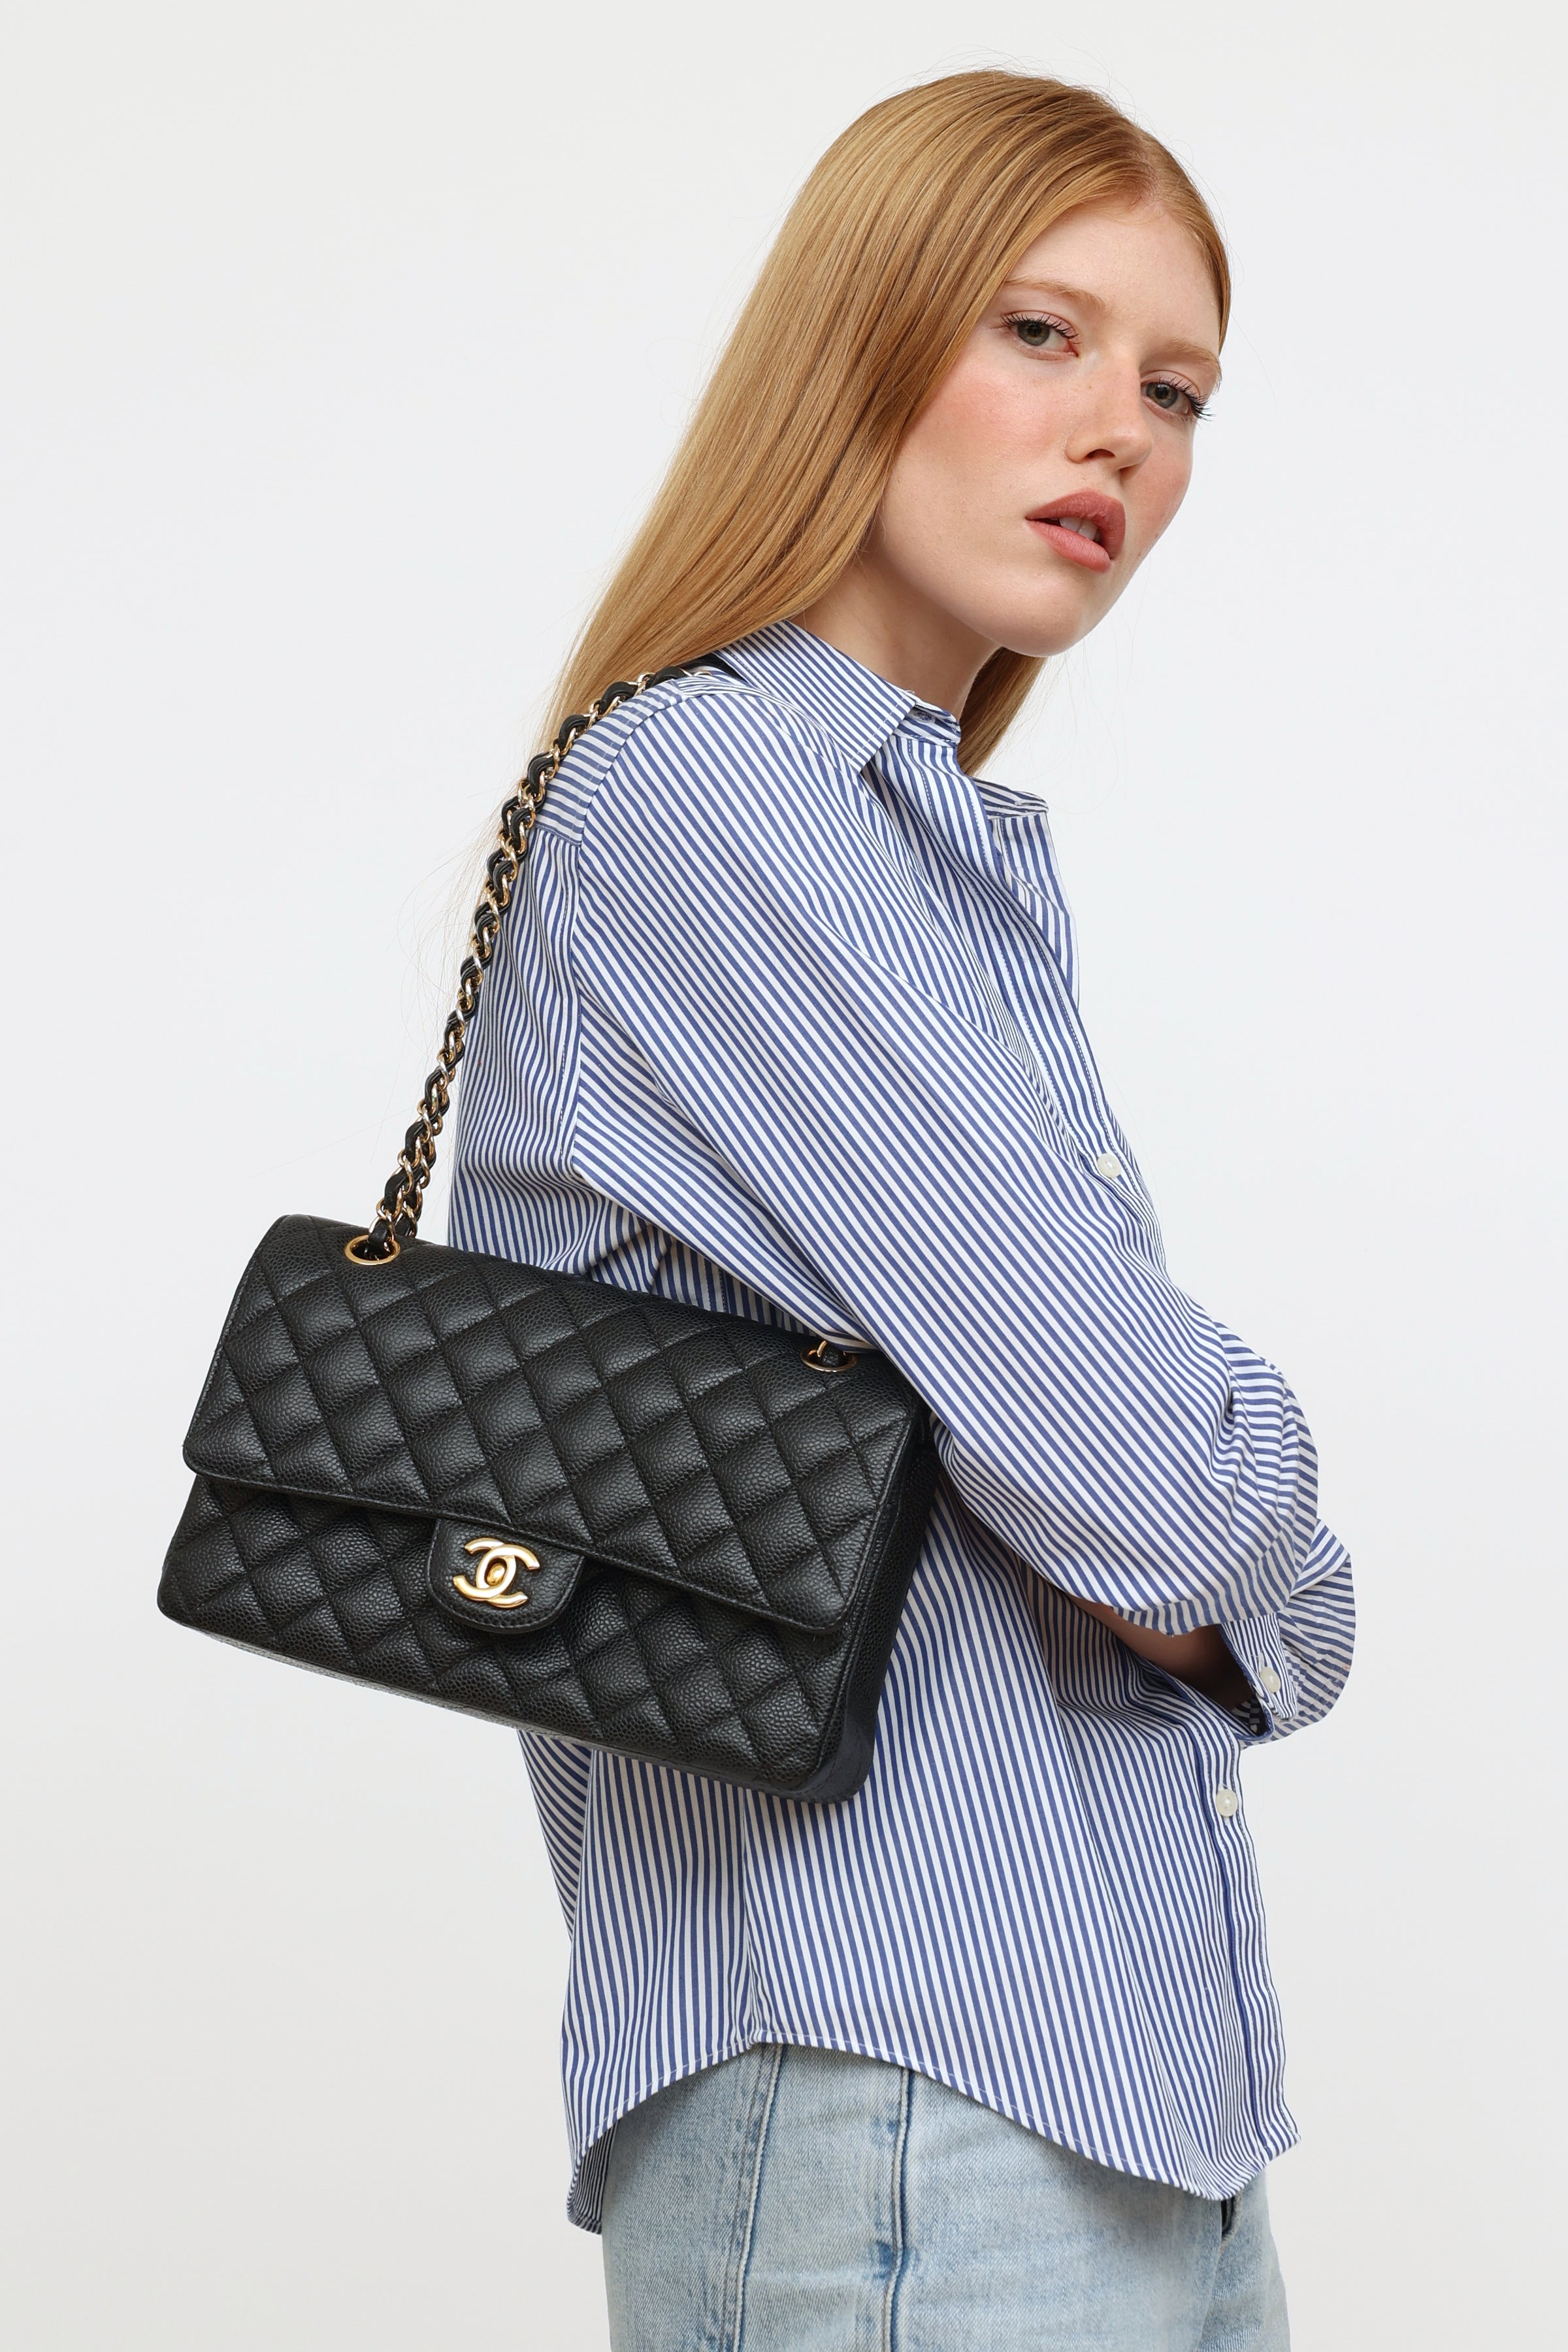 Chanel // Black Caviar Medium Double Flap Bag – VSP Consignment